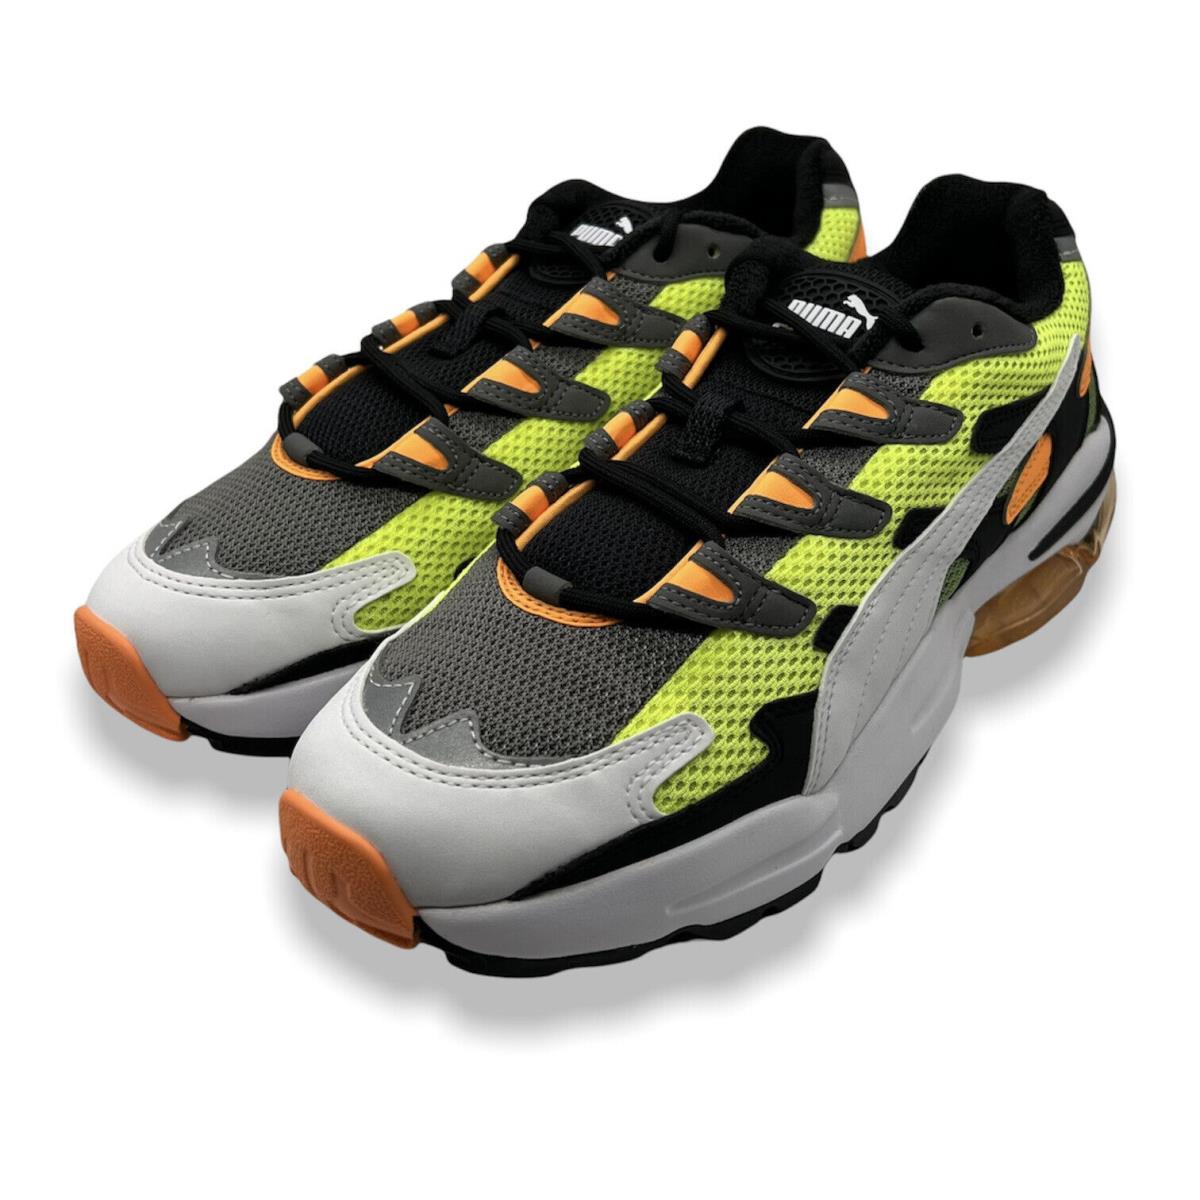 Puma Unisex Multicolor 369801 07 Cell Alien OG Athletic Sneaker Shoes Size 9.5